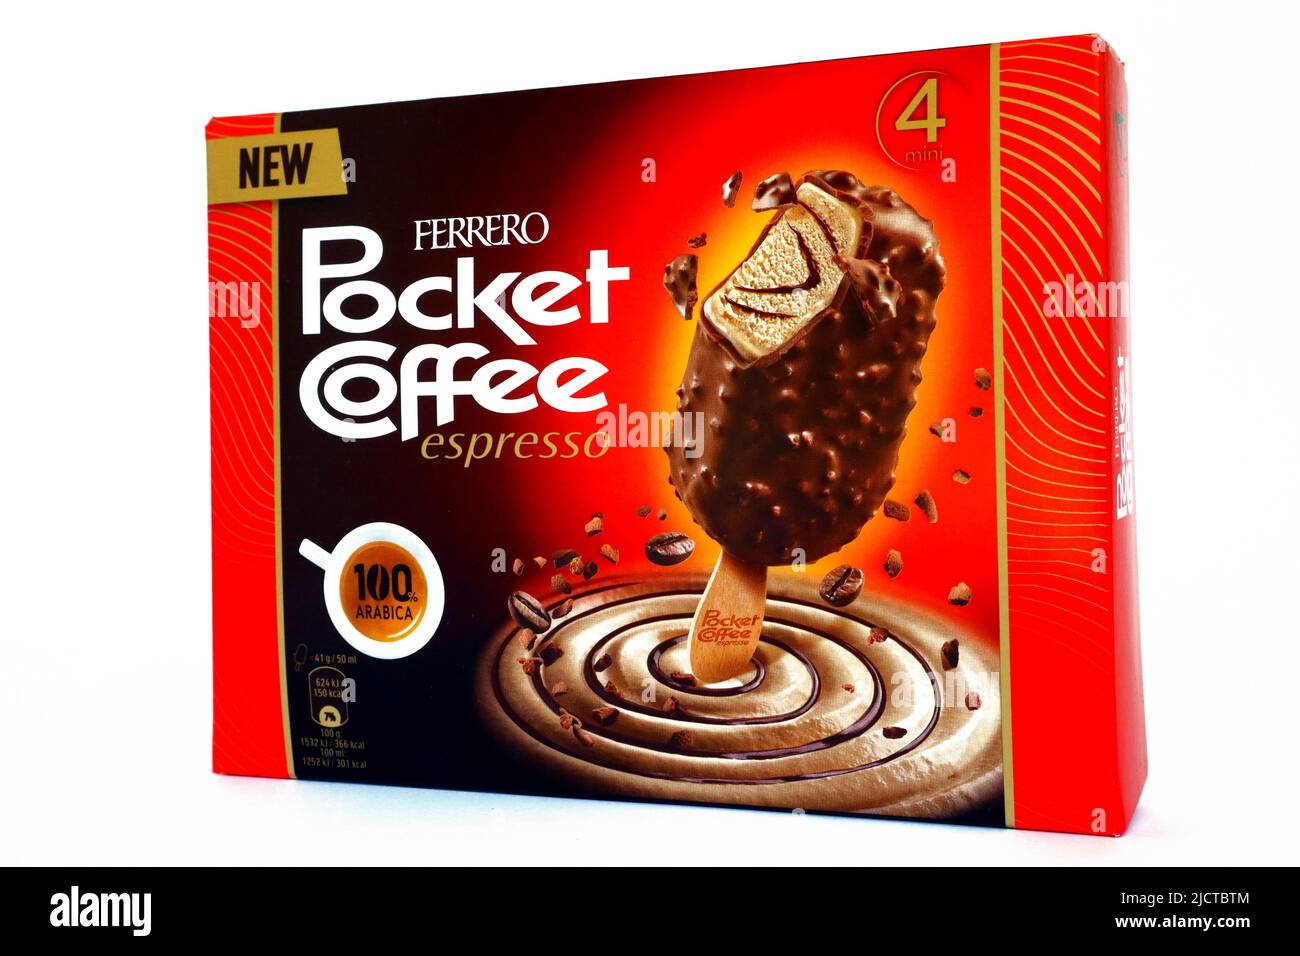 Ferrero Pocket coffee - Italian Espresso Chocolate: Buy Now!